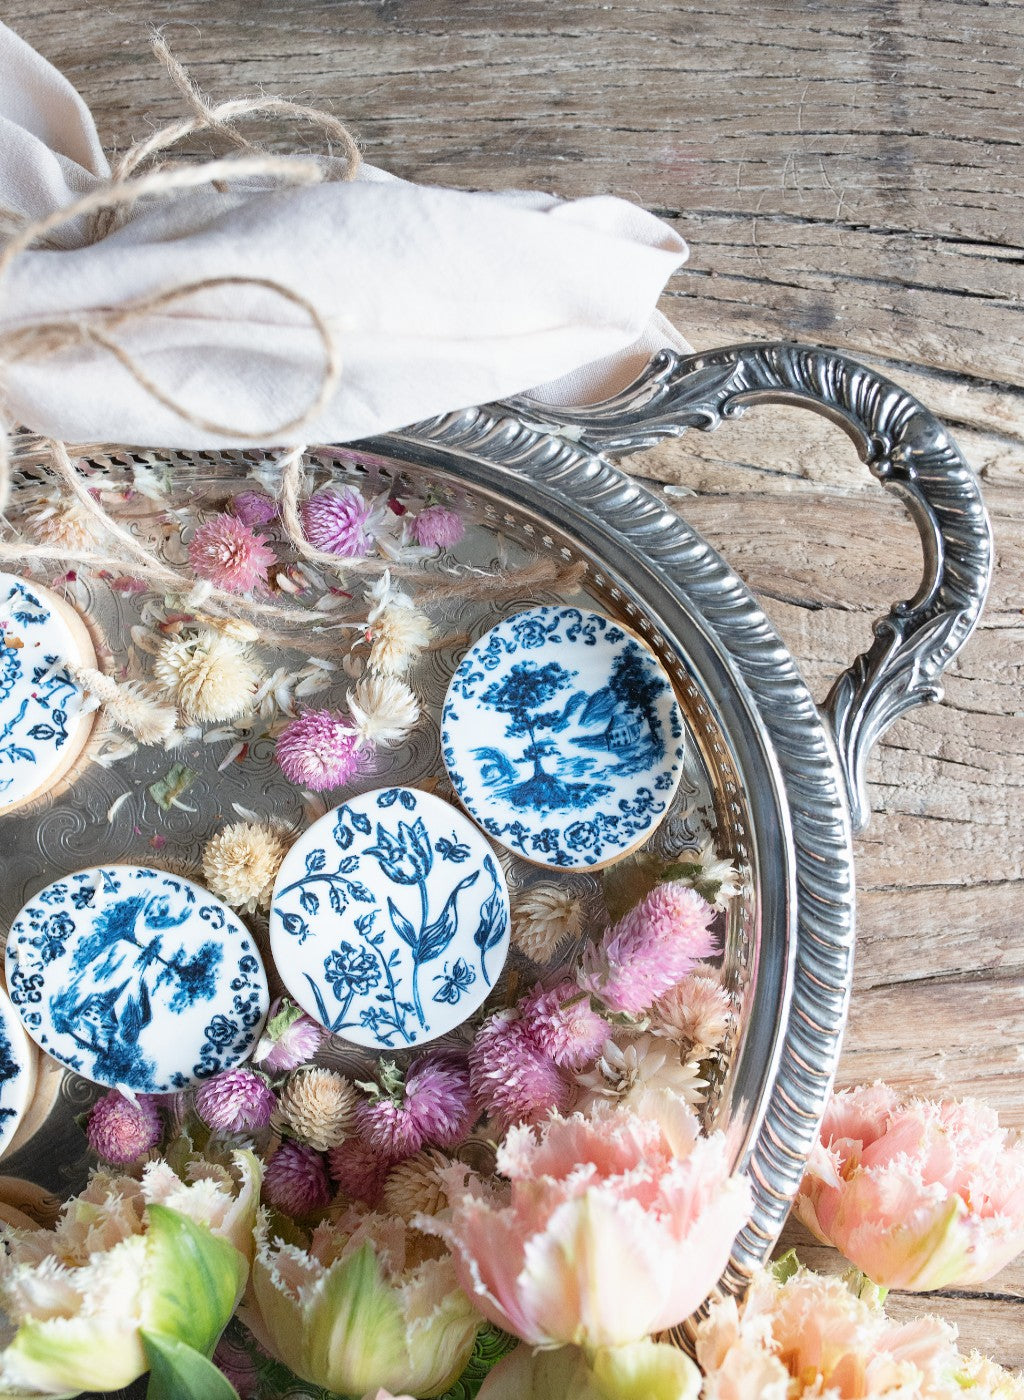 sobang decorative cookies on silver antique mdlm platter